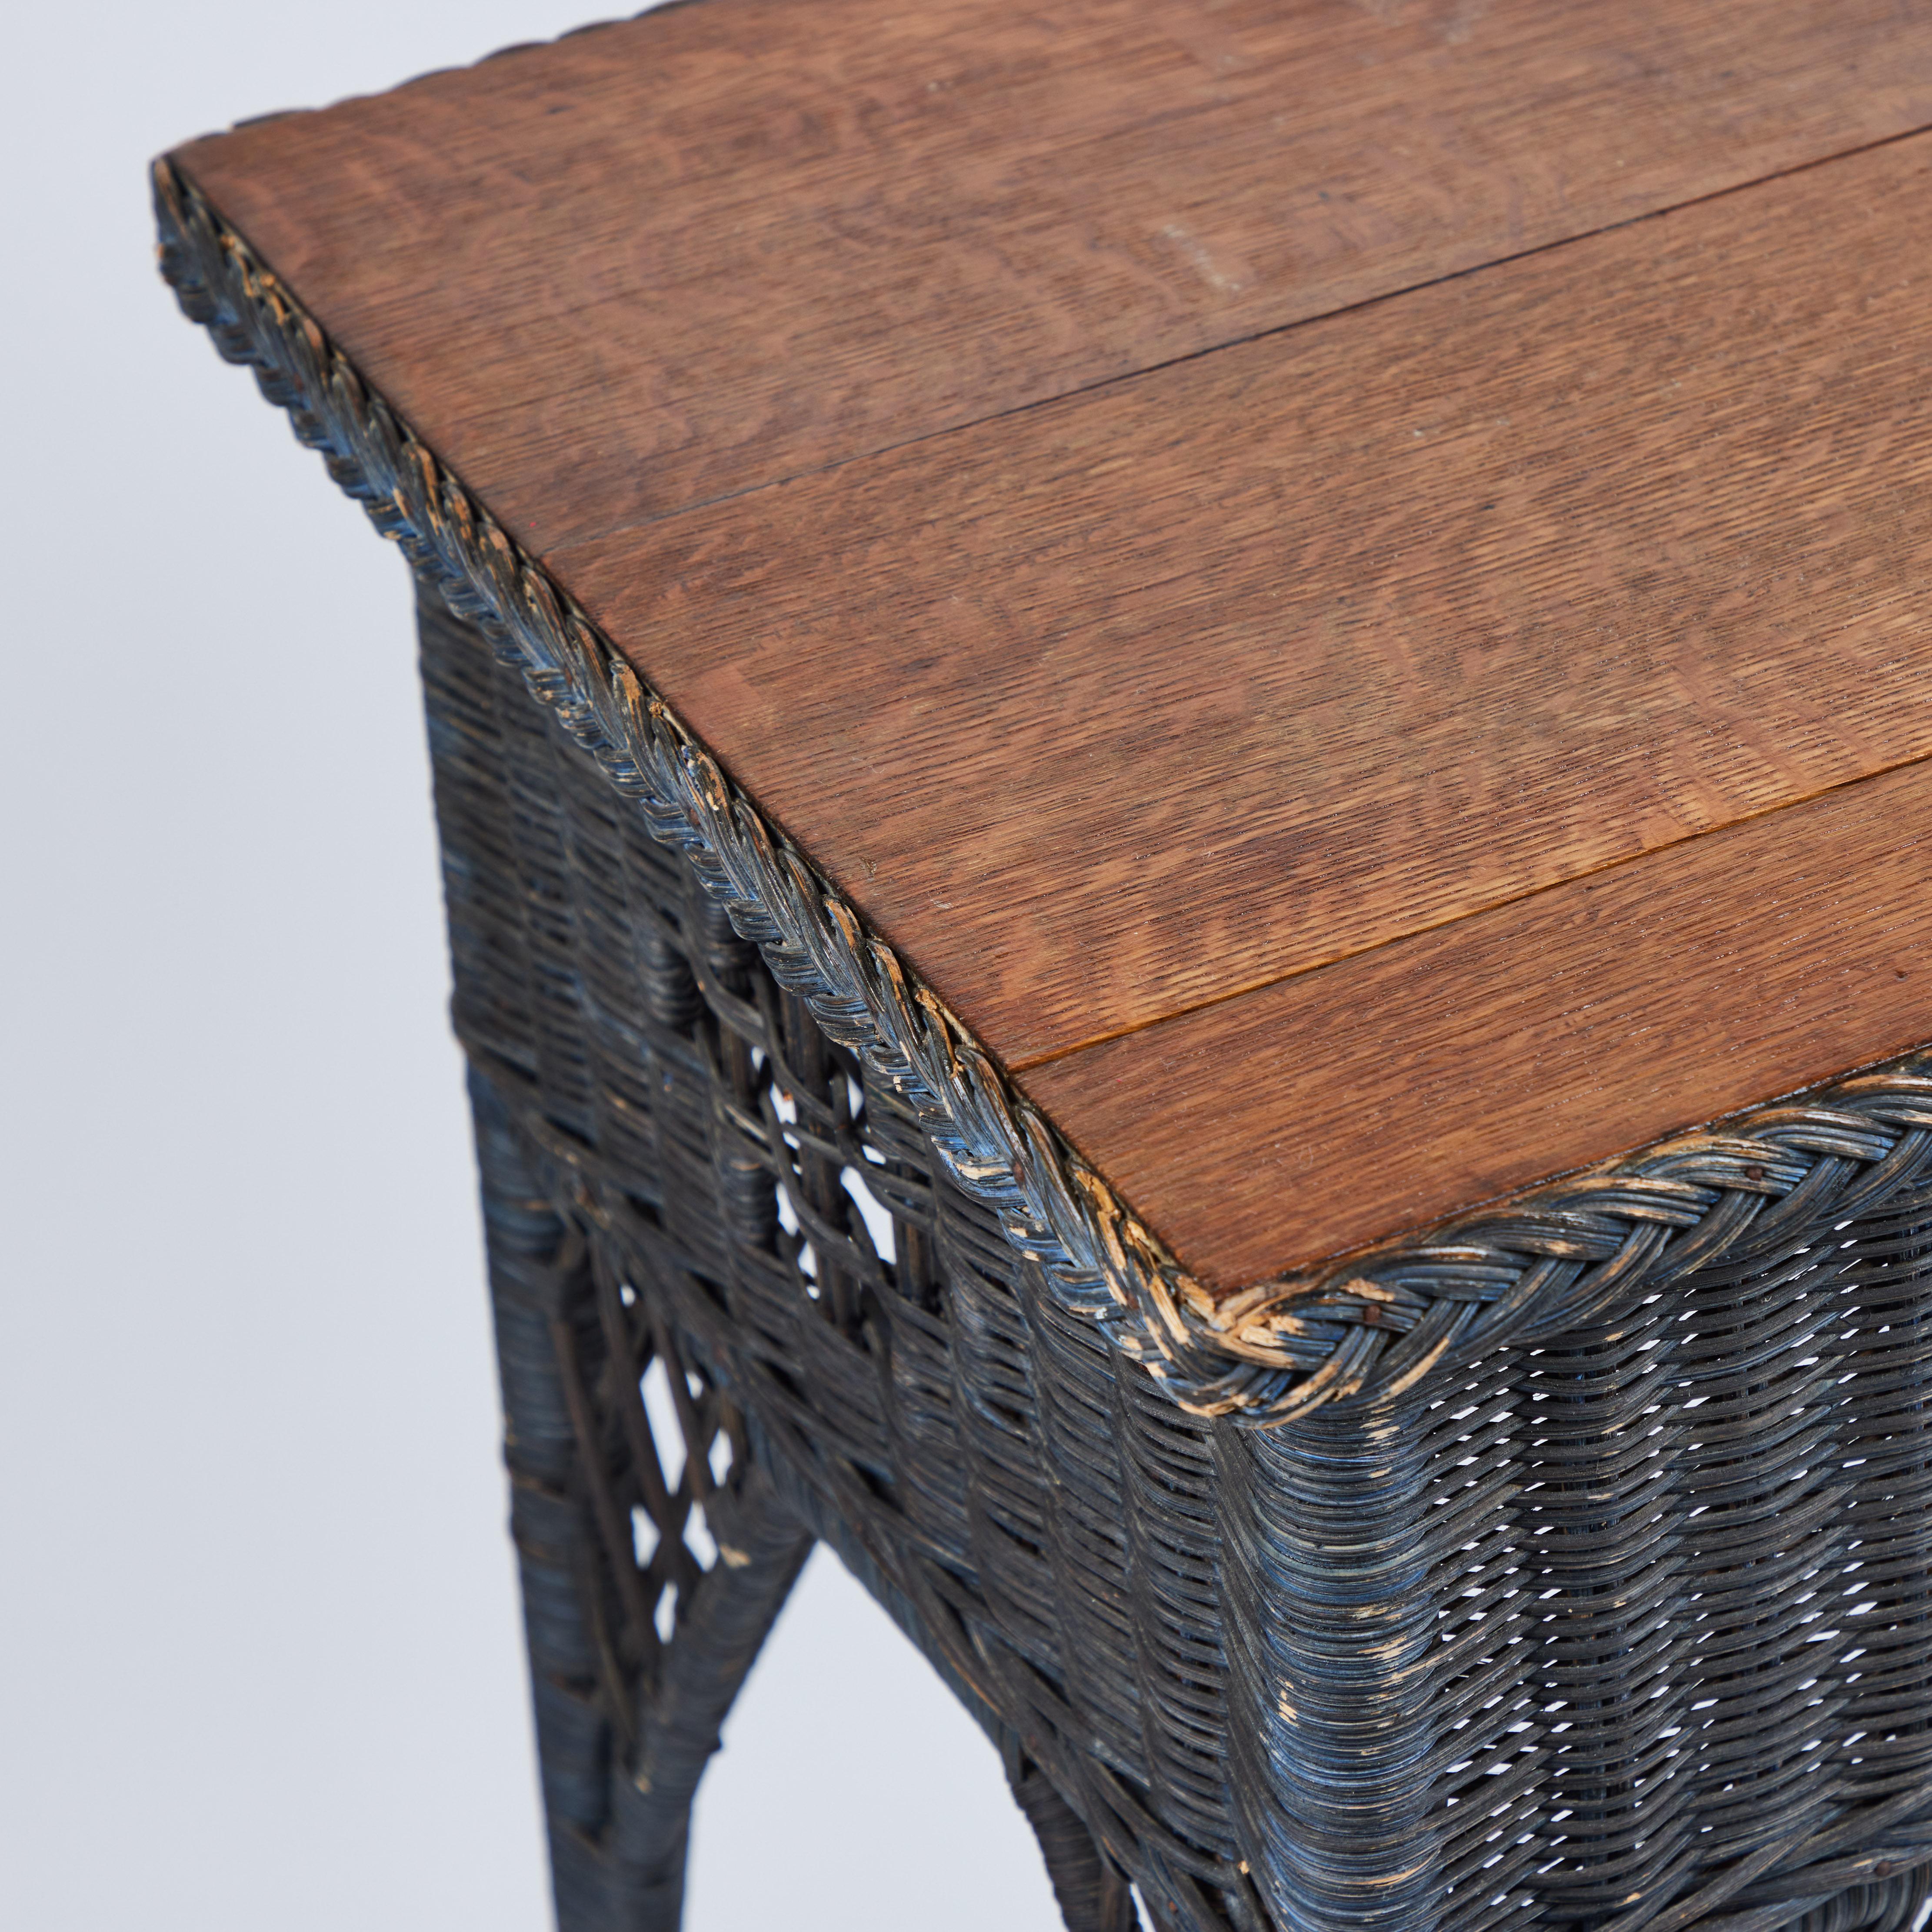 Vintage Wicker Table w/ Original Finish + Wood Top 2